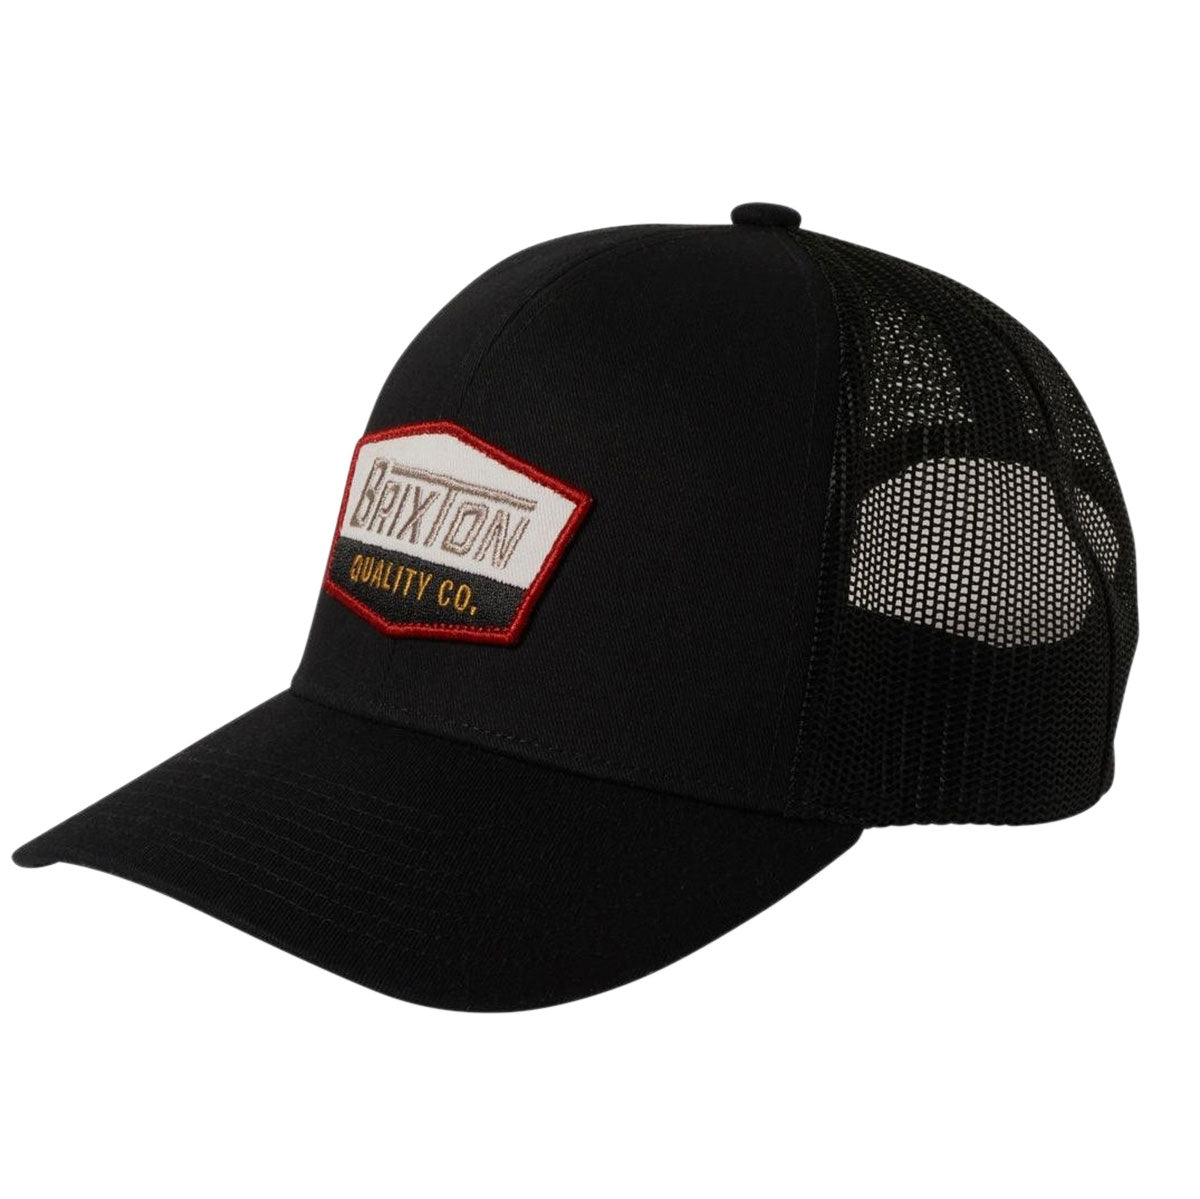 Brixton Regal Netplus Mp Trucker Hat - Black/Black image 1